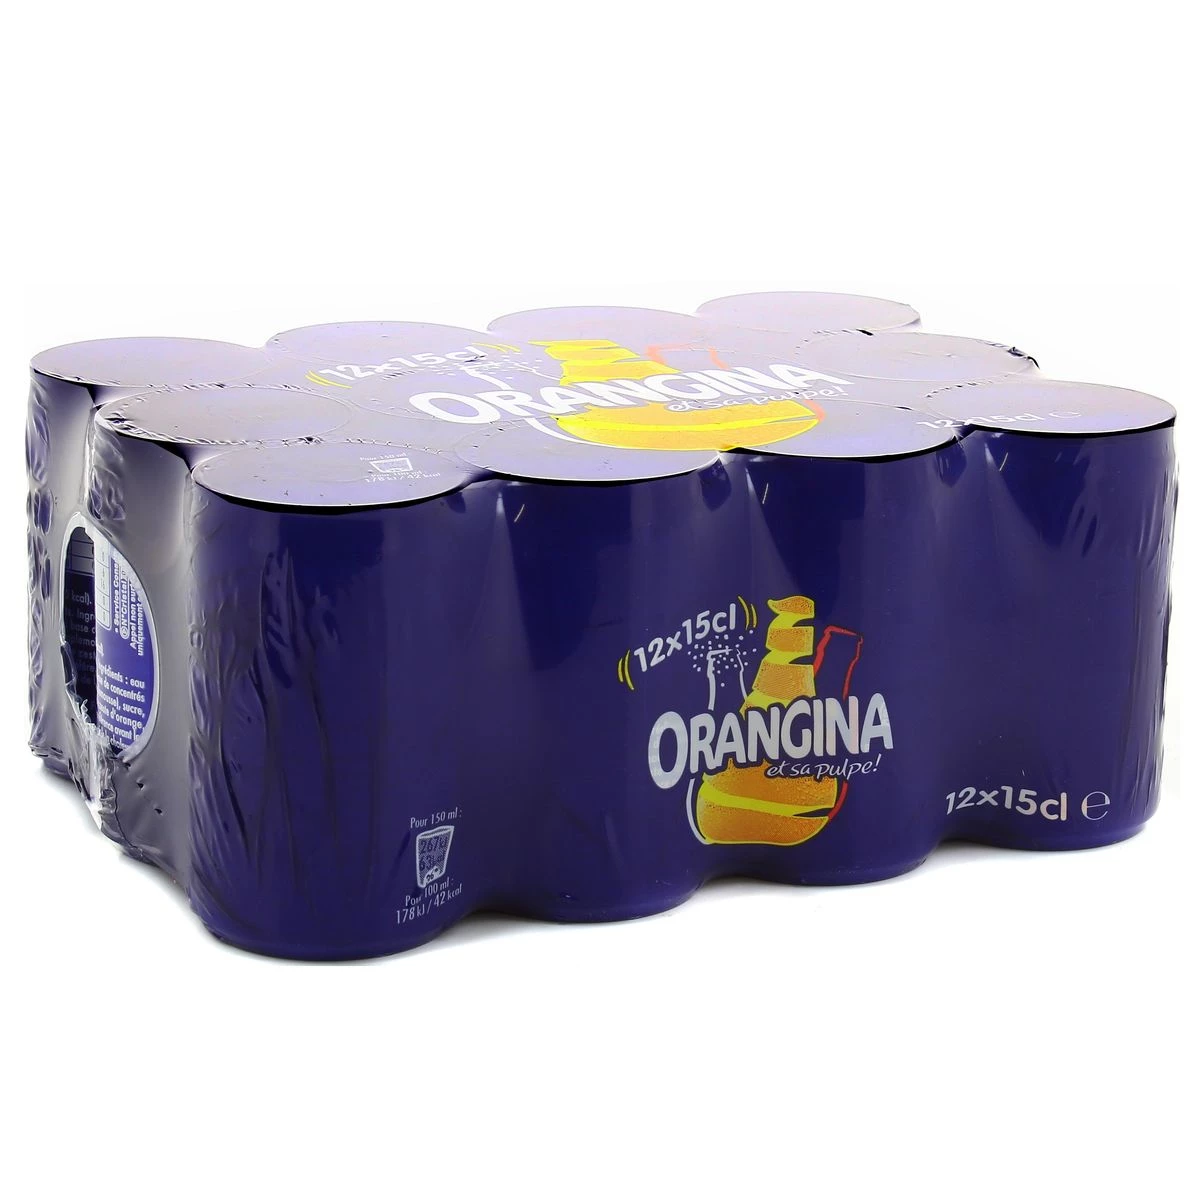 Refrigerante laranja 12x15cl - ORANGINA